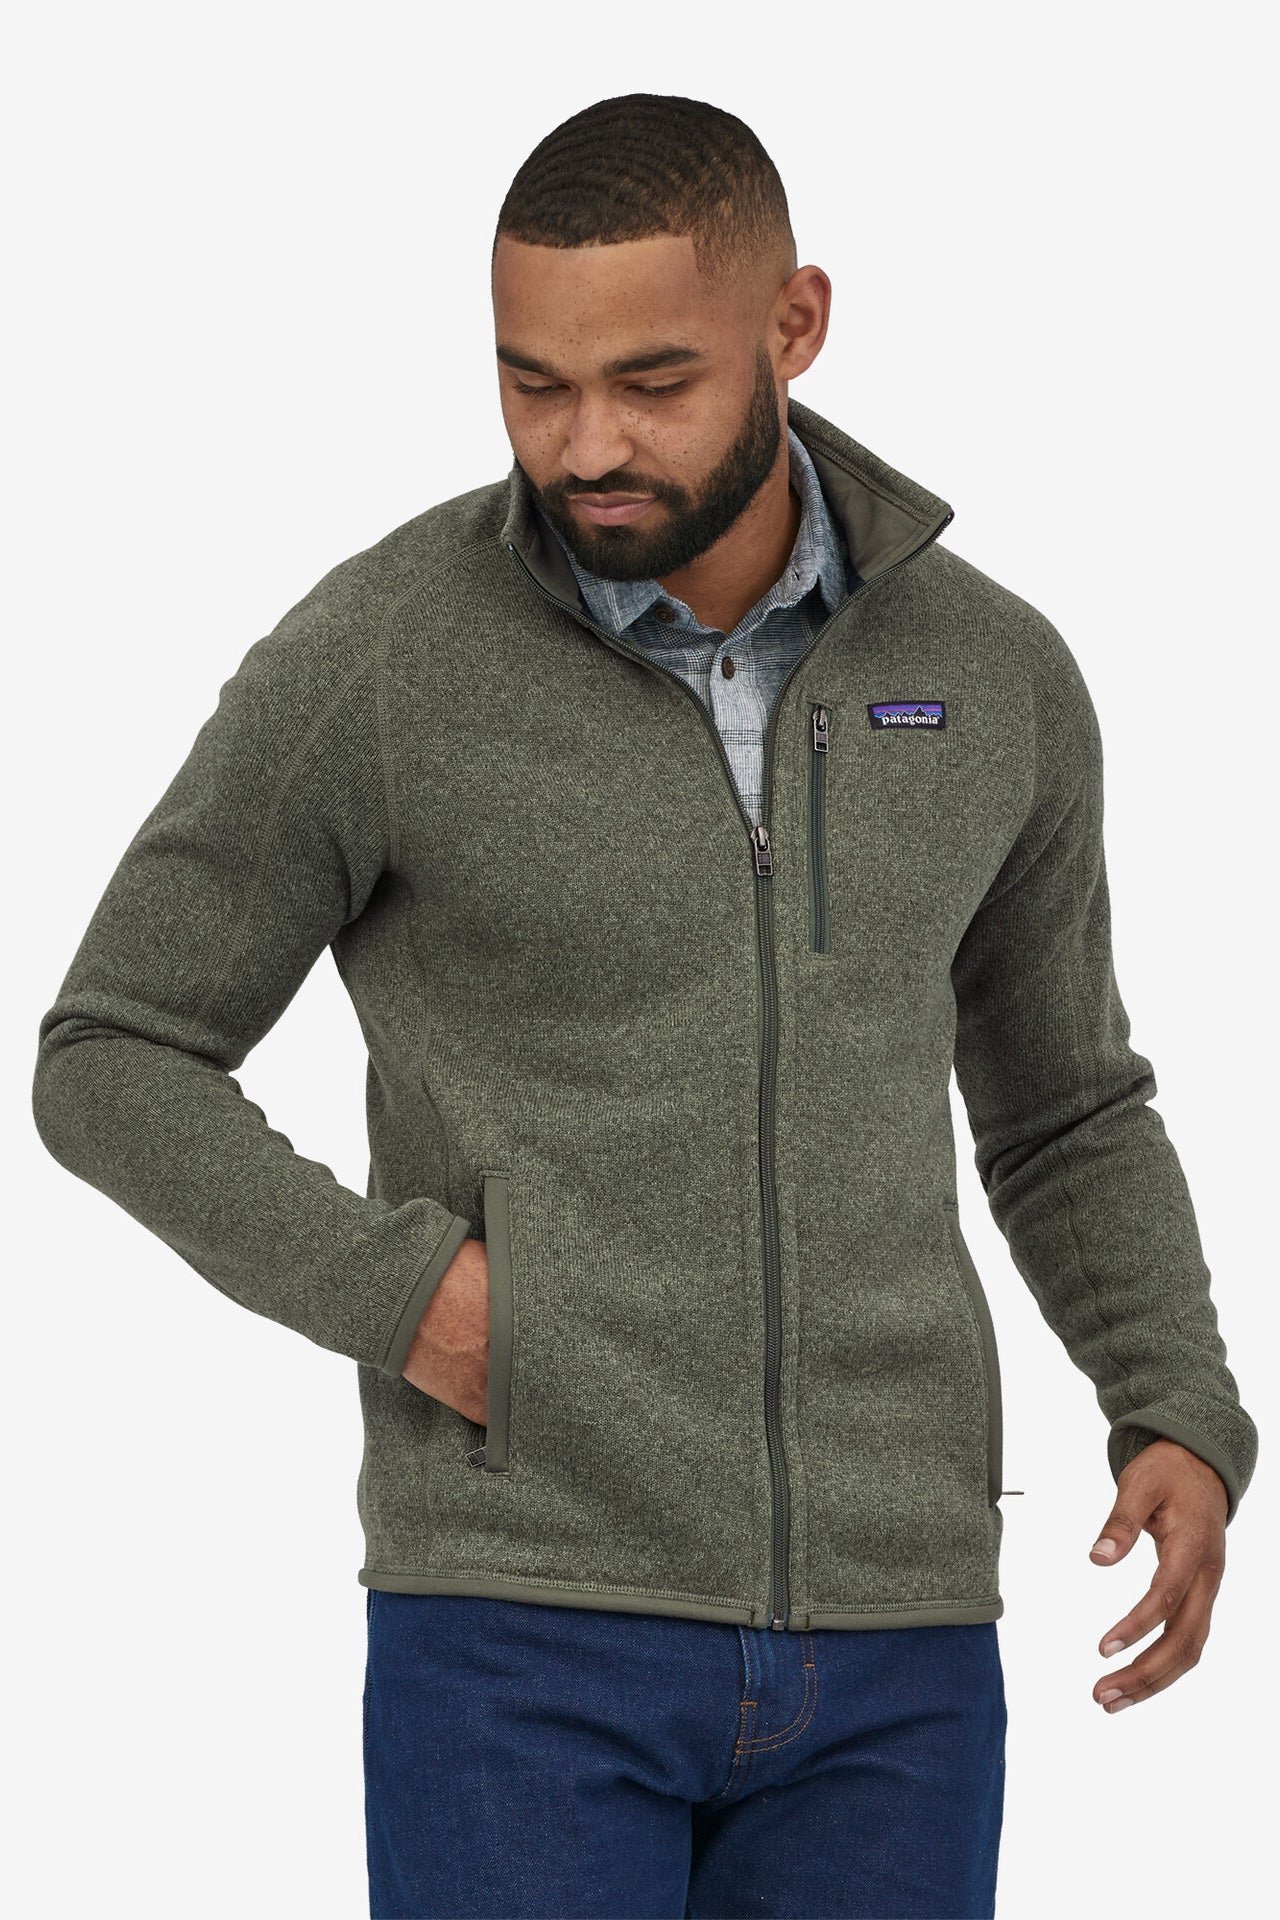 Patagonia Men's Better Sweater Jacket (Nouveau Green) Fleece